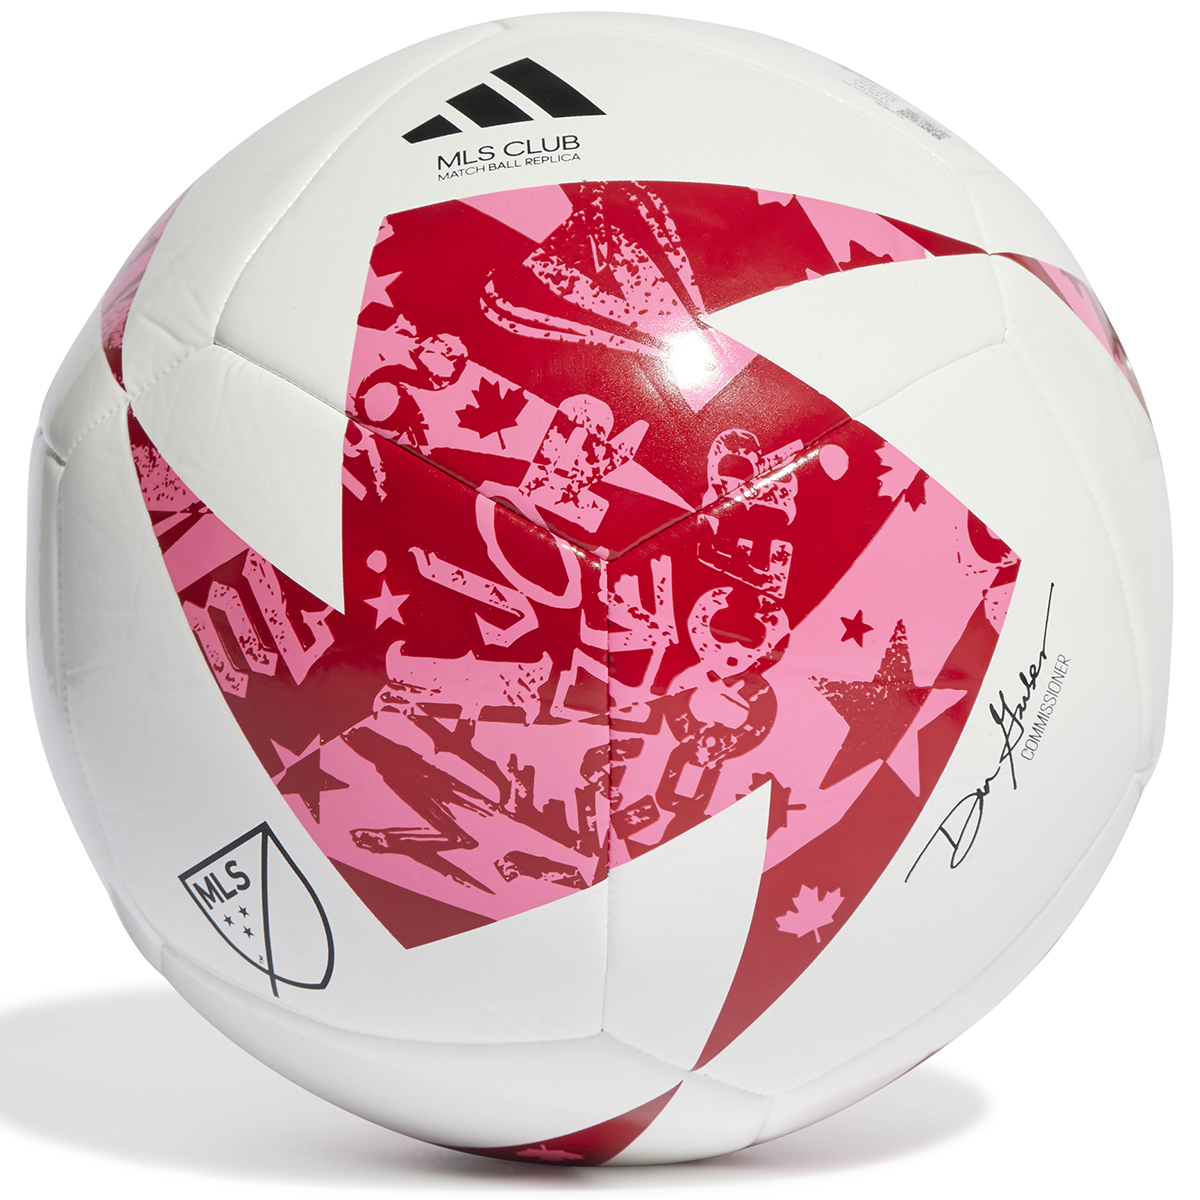 Adidas Mls Club Soccer Ball, Size 4, White